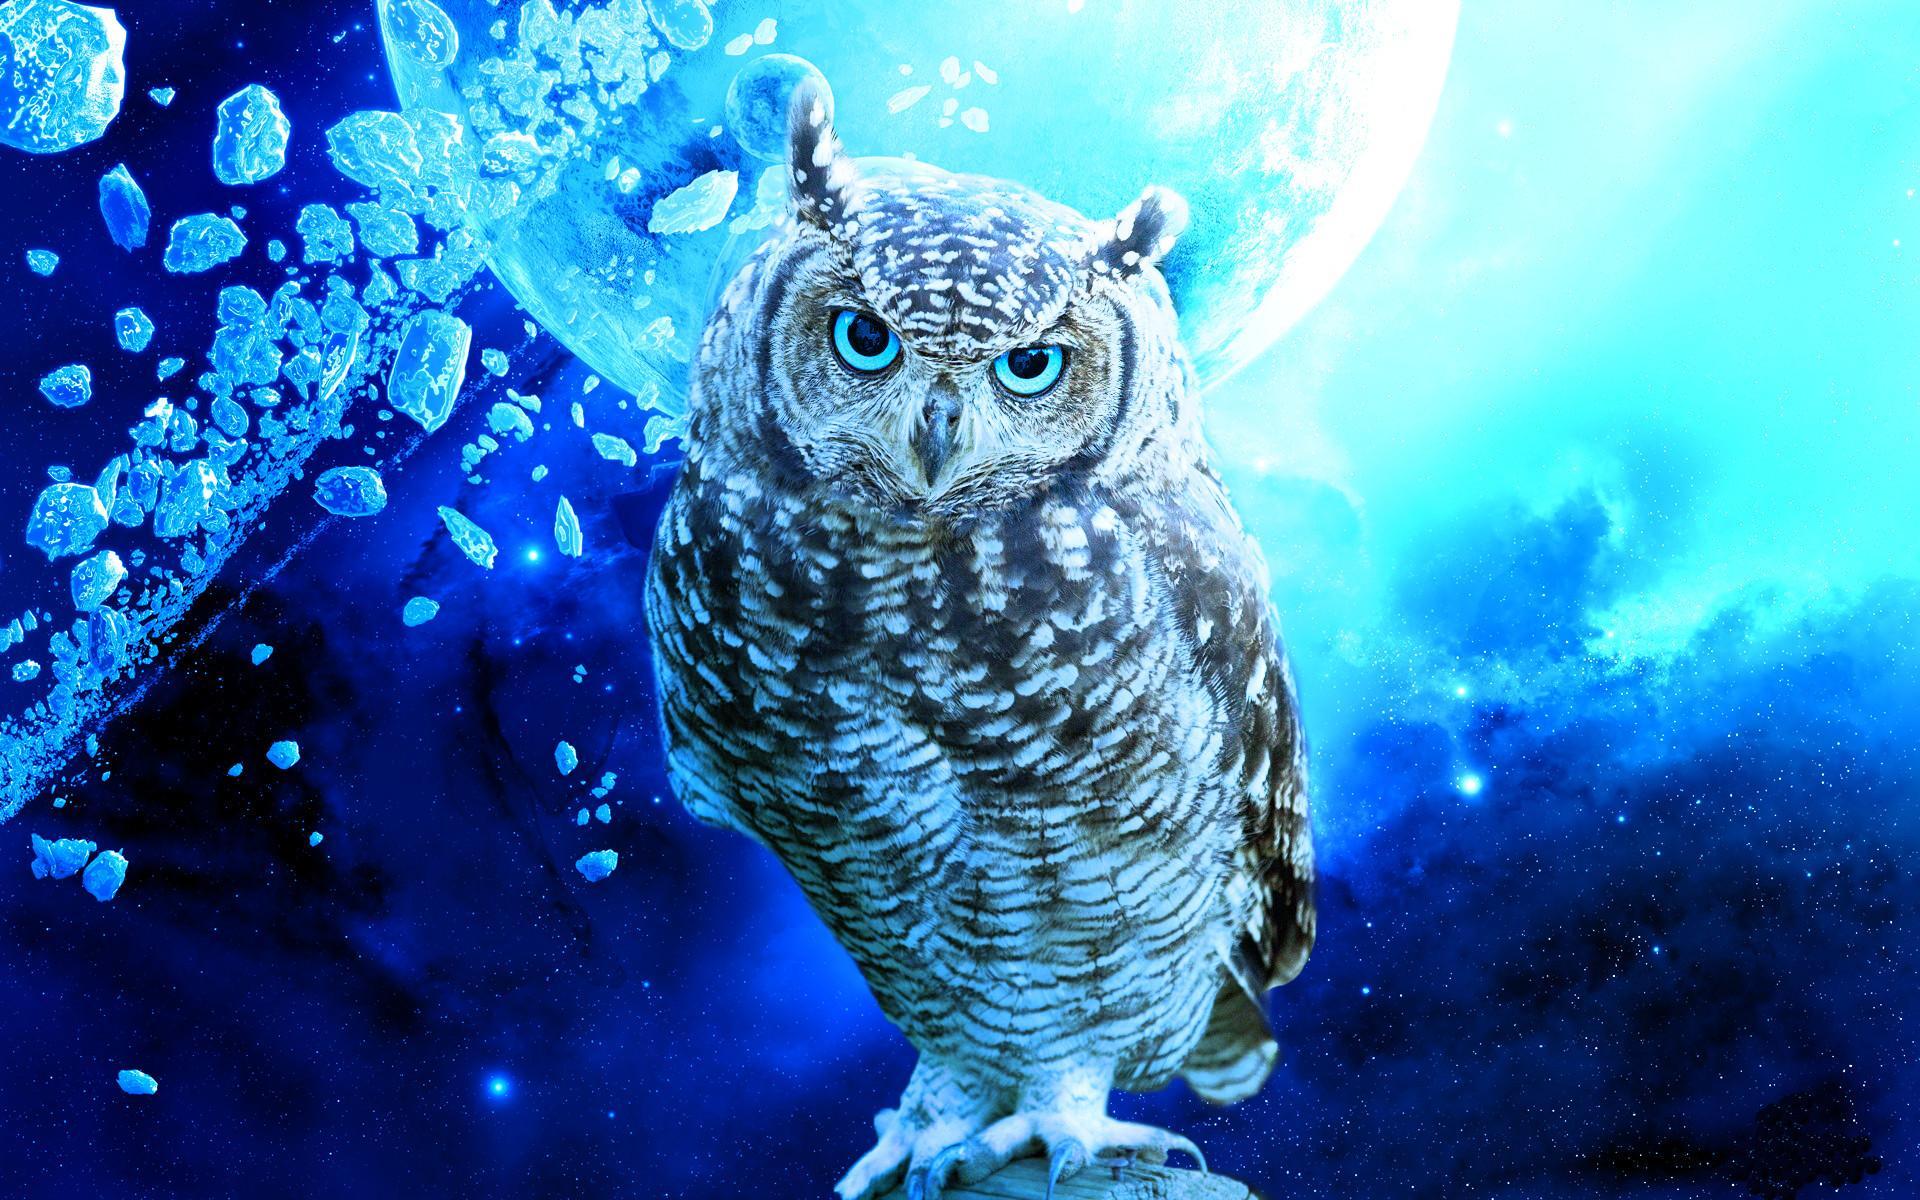 Cute Owl Halloween Wallpapers - Top Free Cute Owl Halloween Backgrounds ...